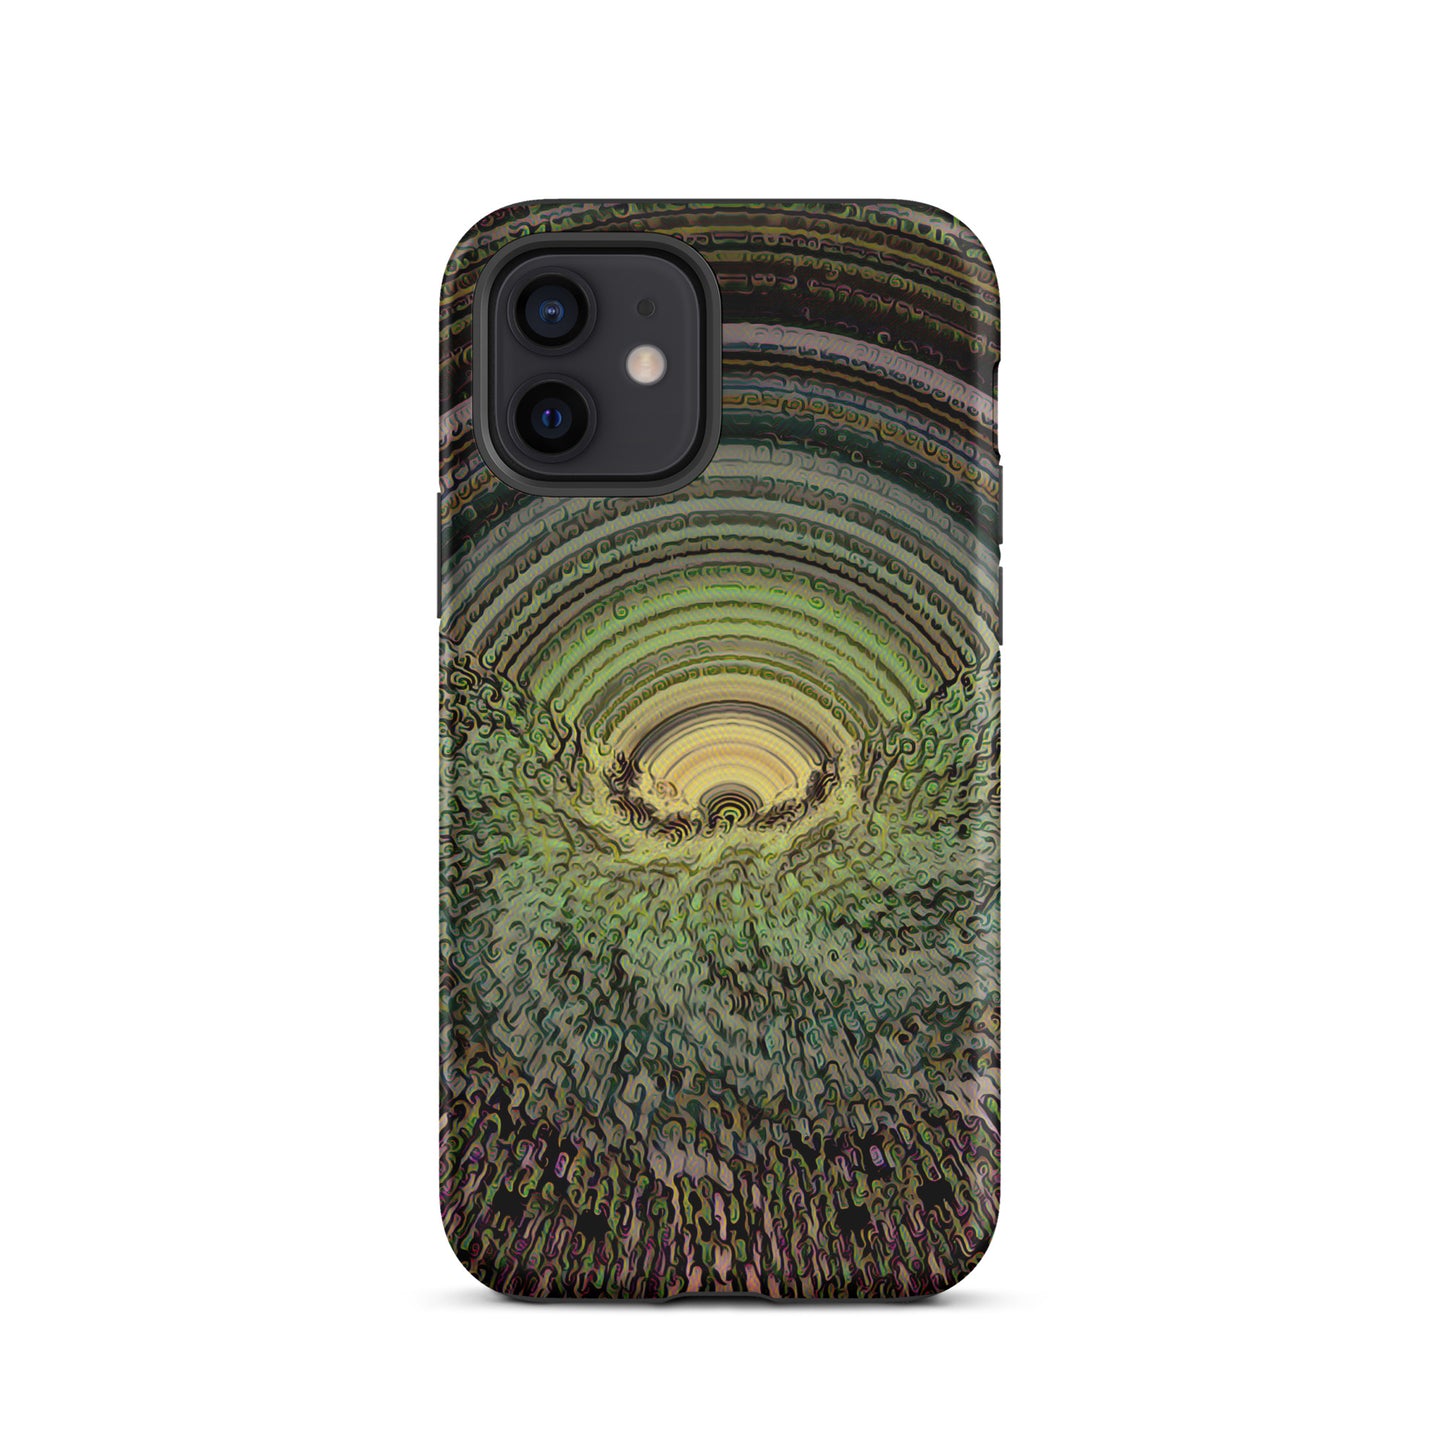 "Inner Sunset" iCanvas Tough iPhone case